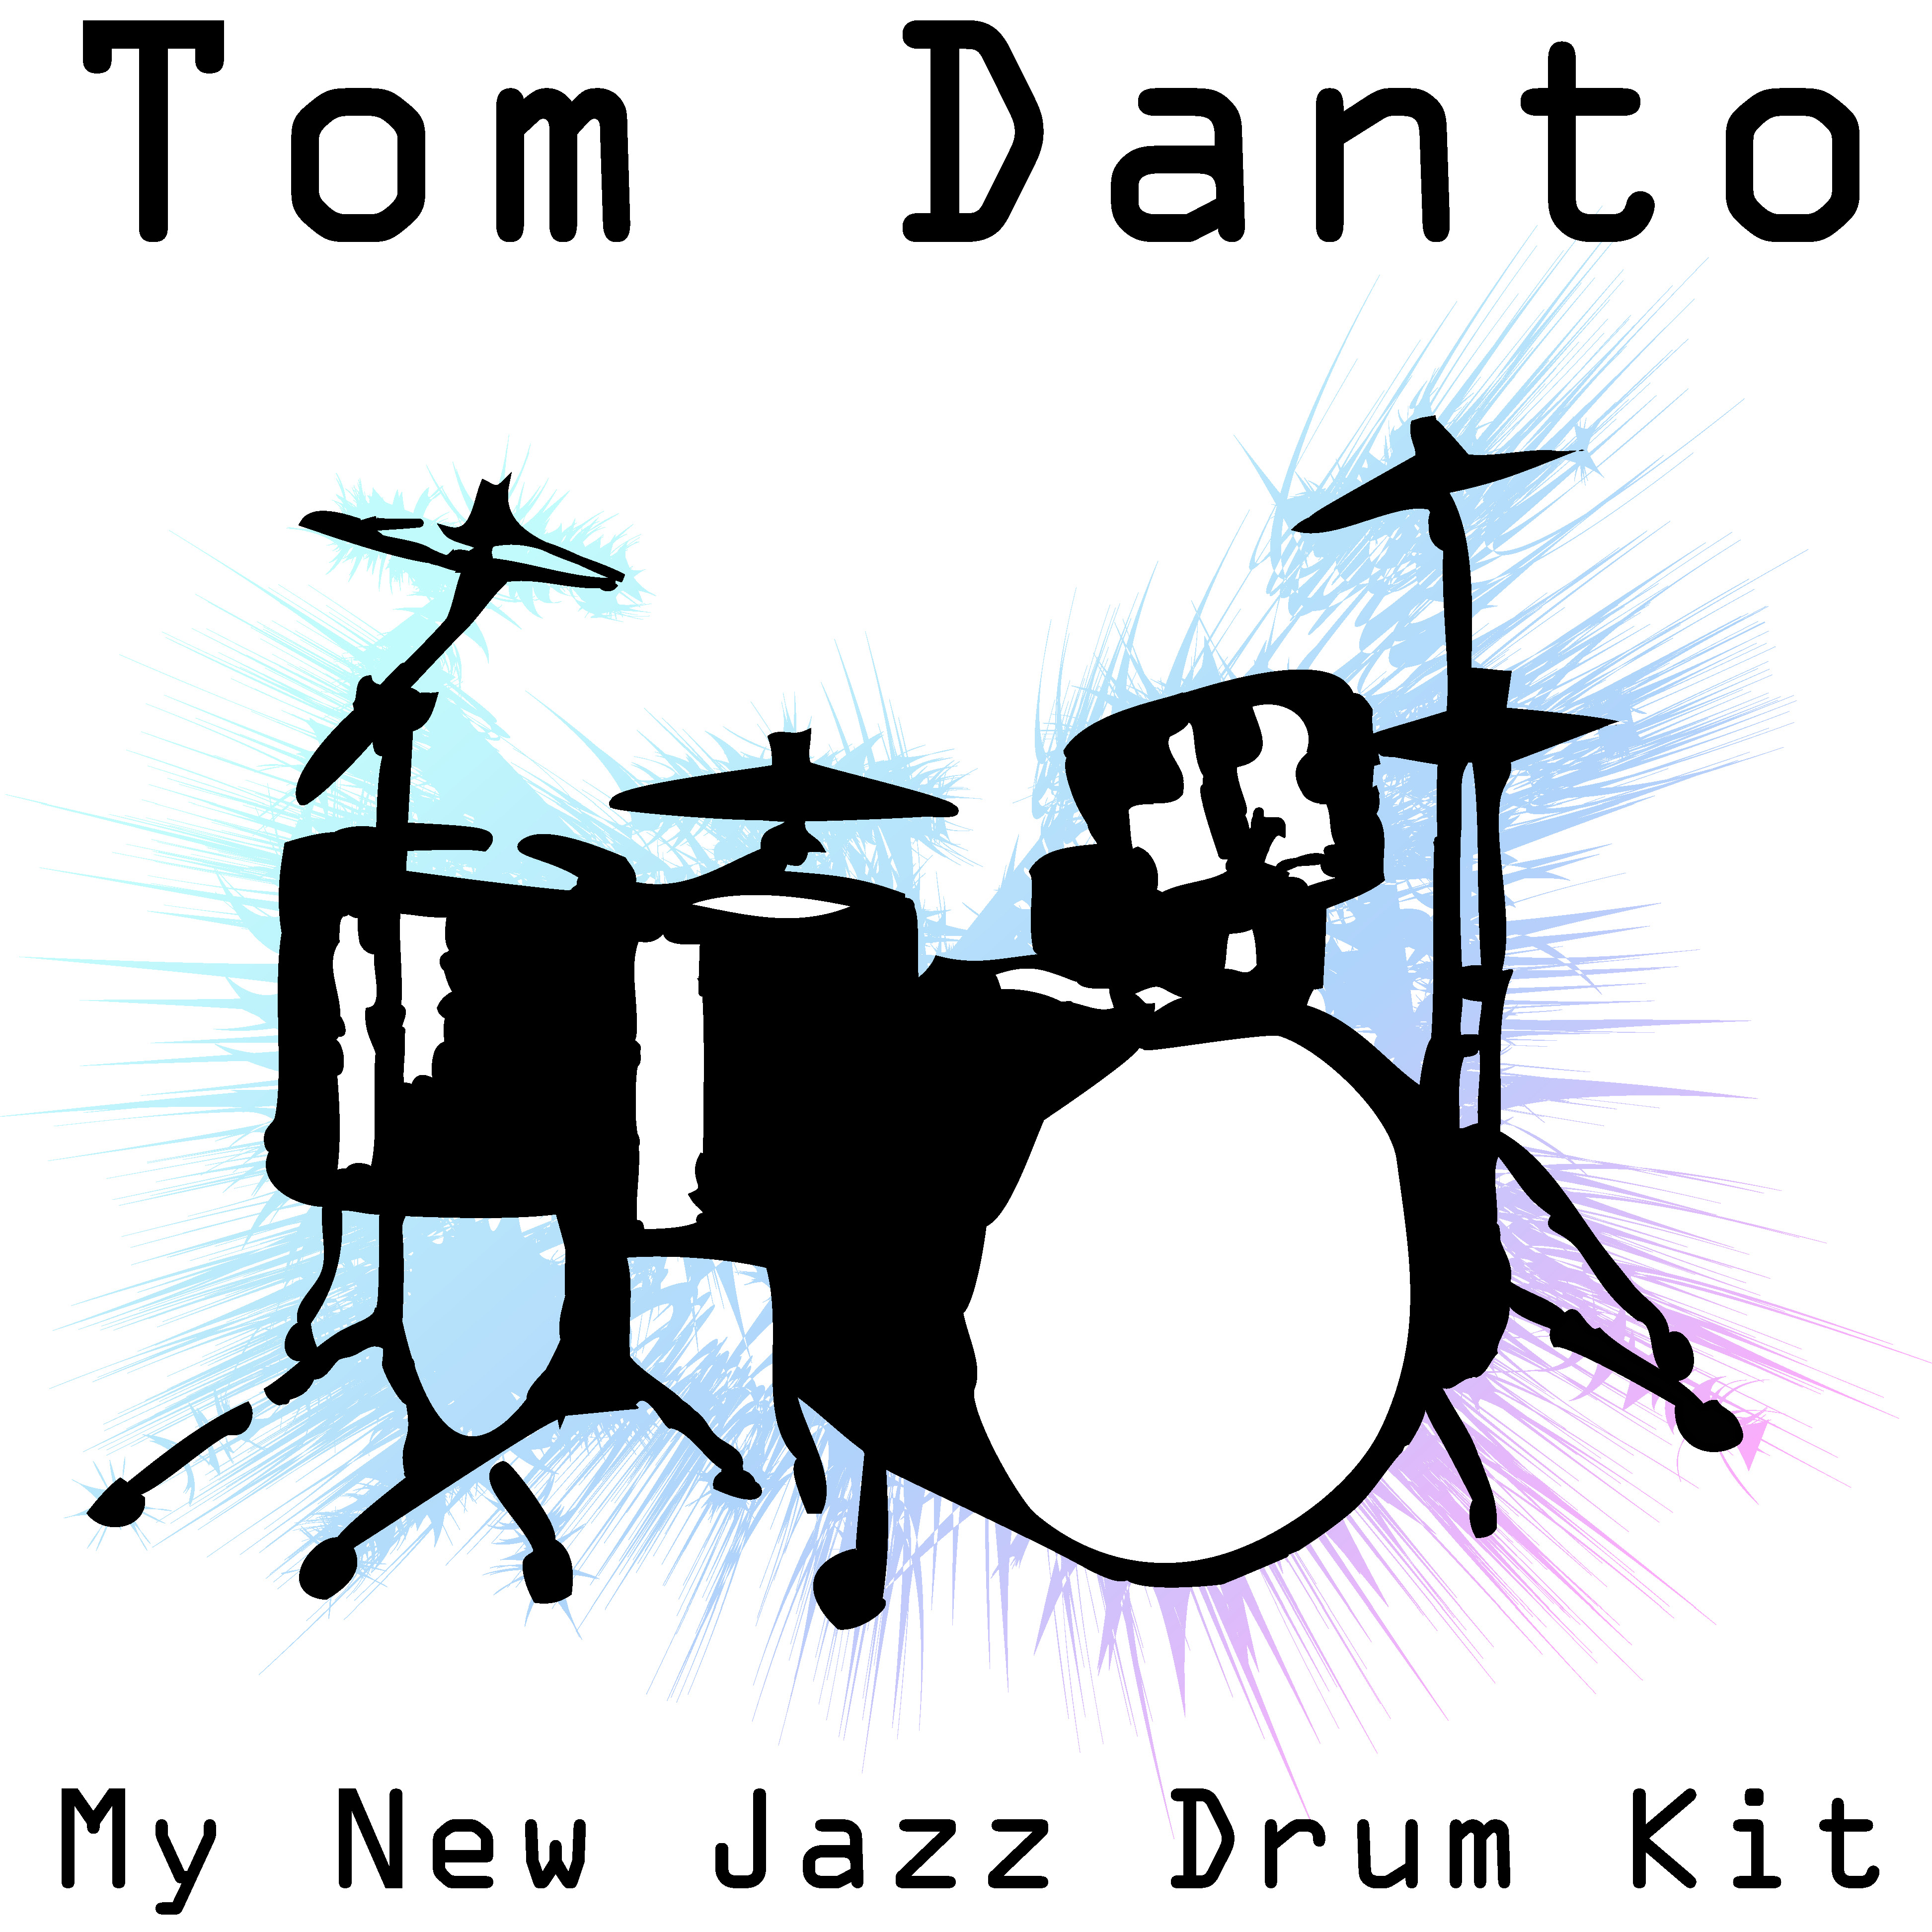 My new Jazz Drum Kit